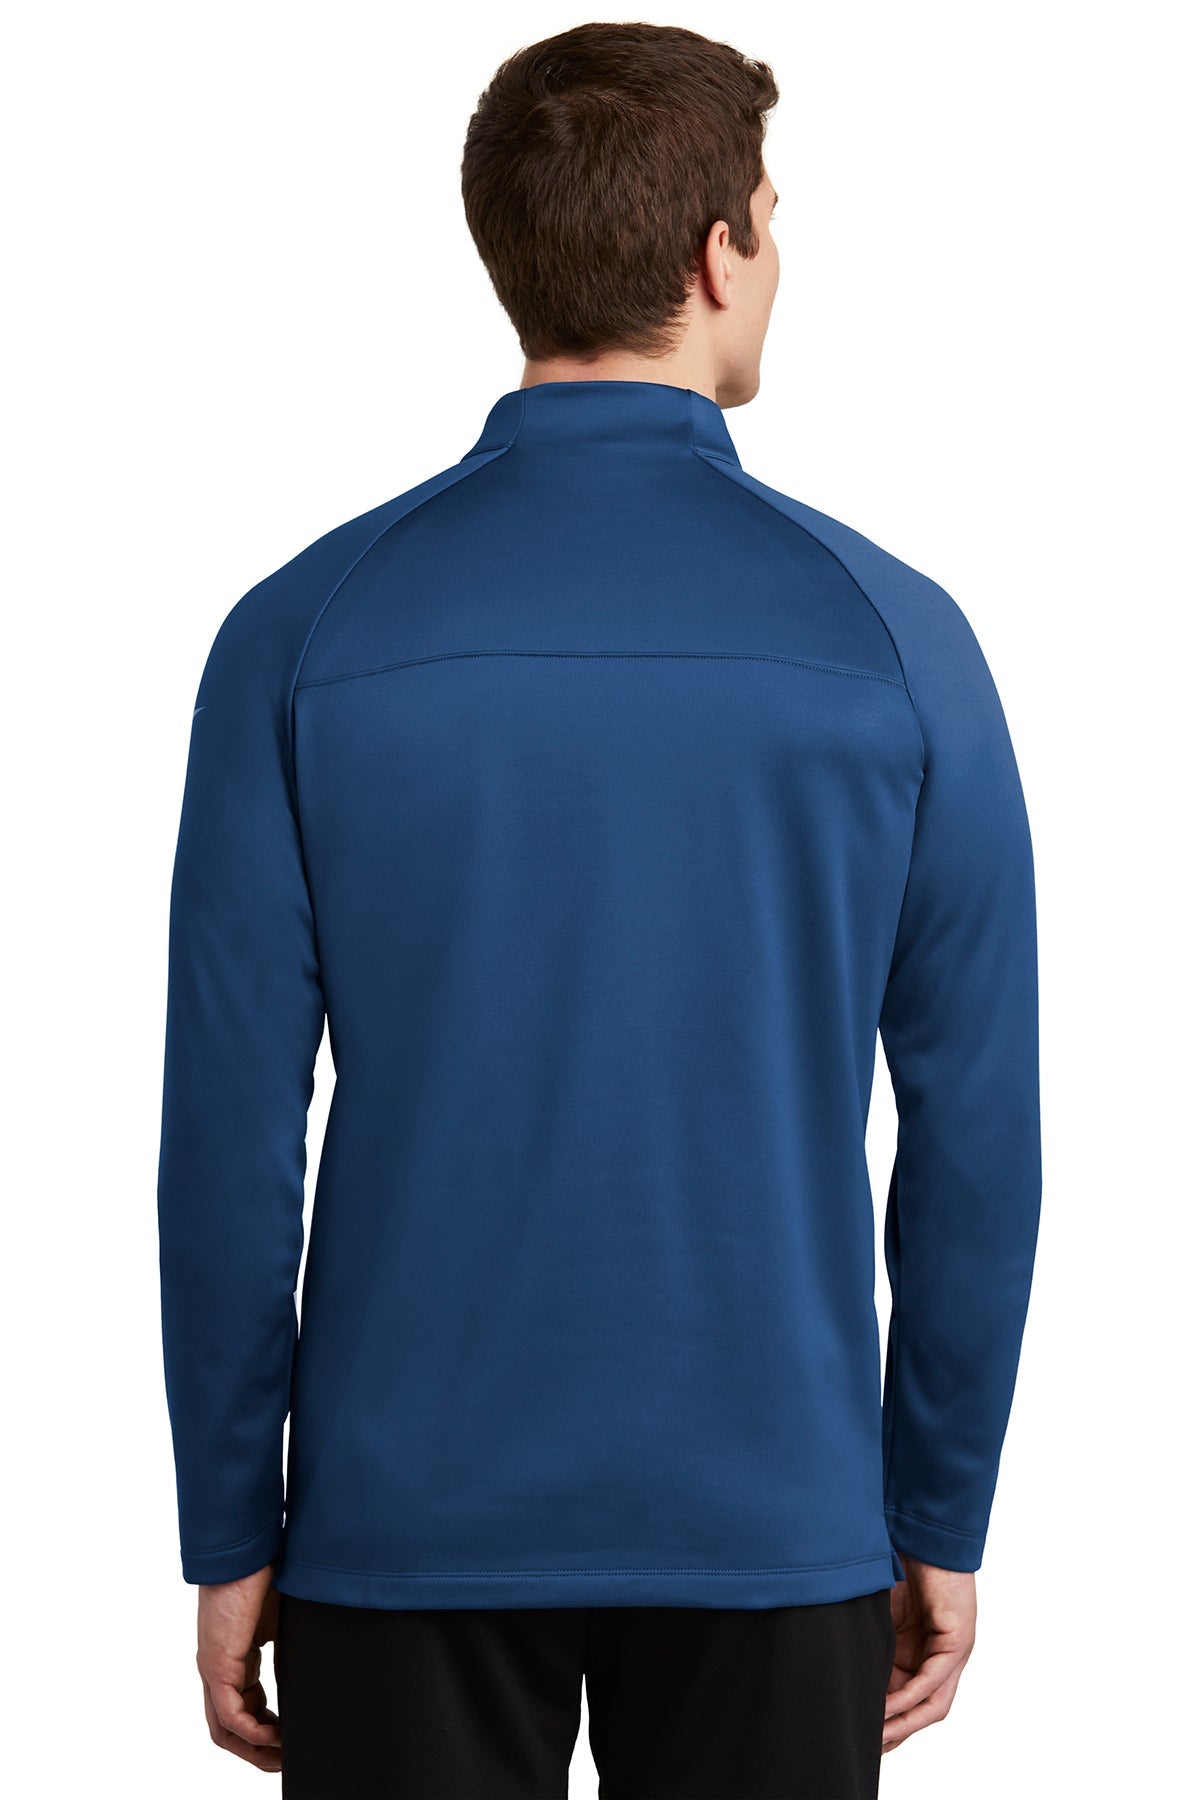 Nike ThermaFIT Custom Fleece Quarter Zips, Gym Blue